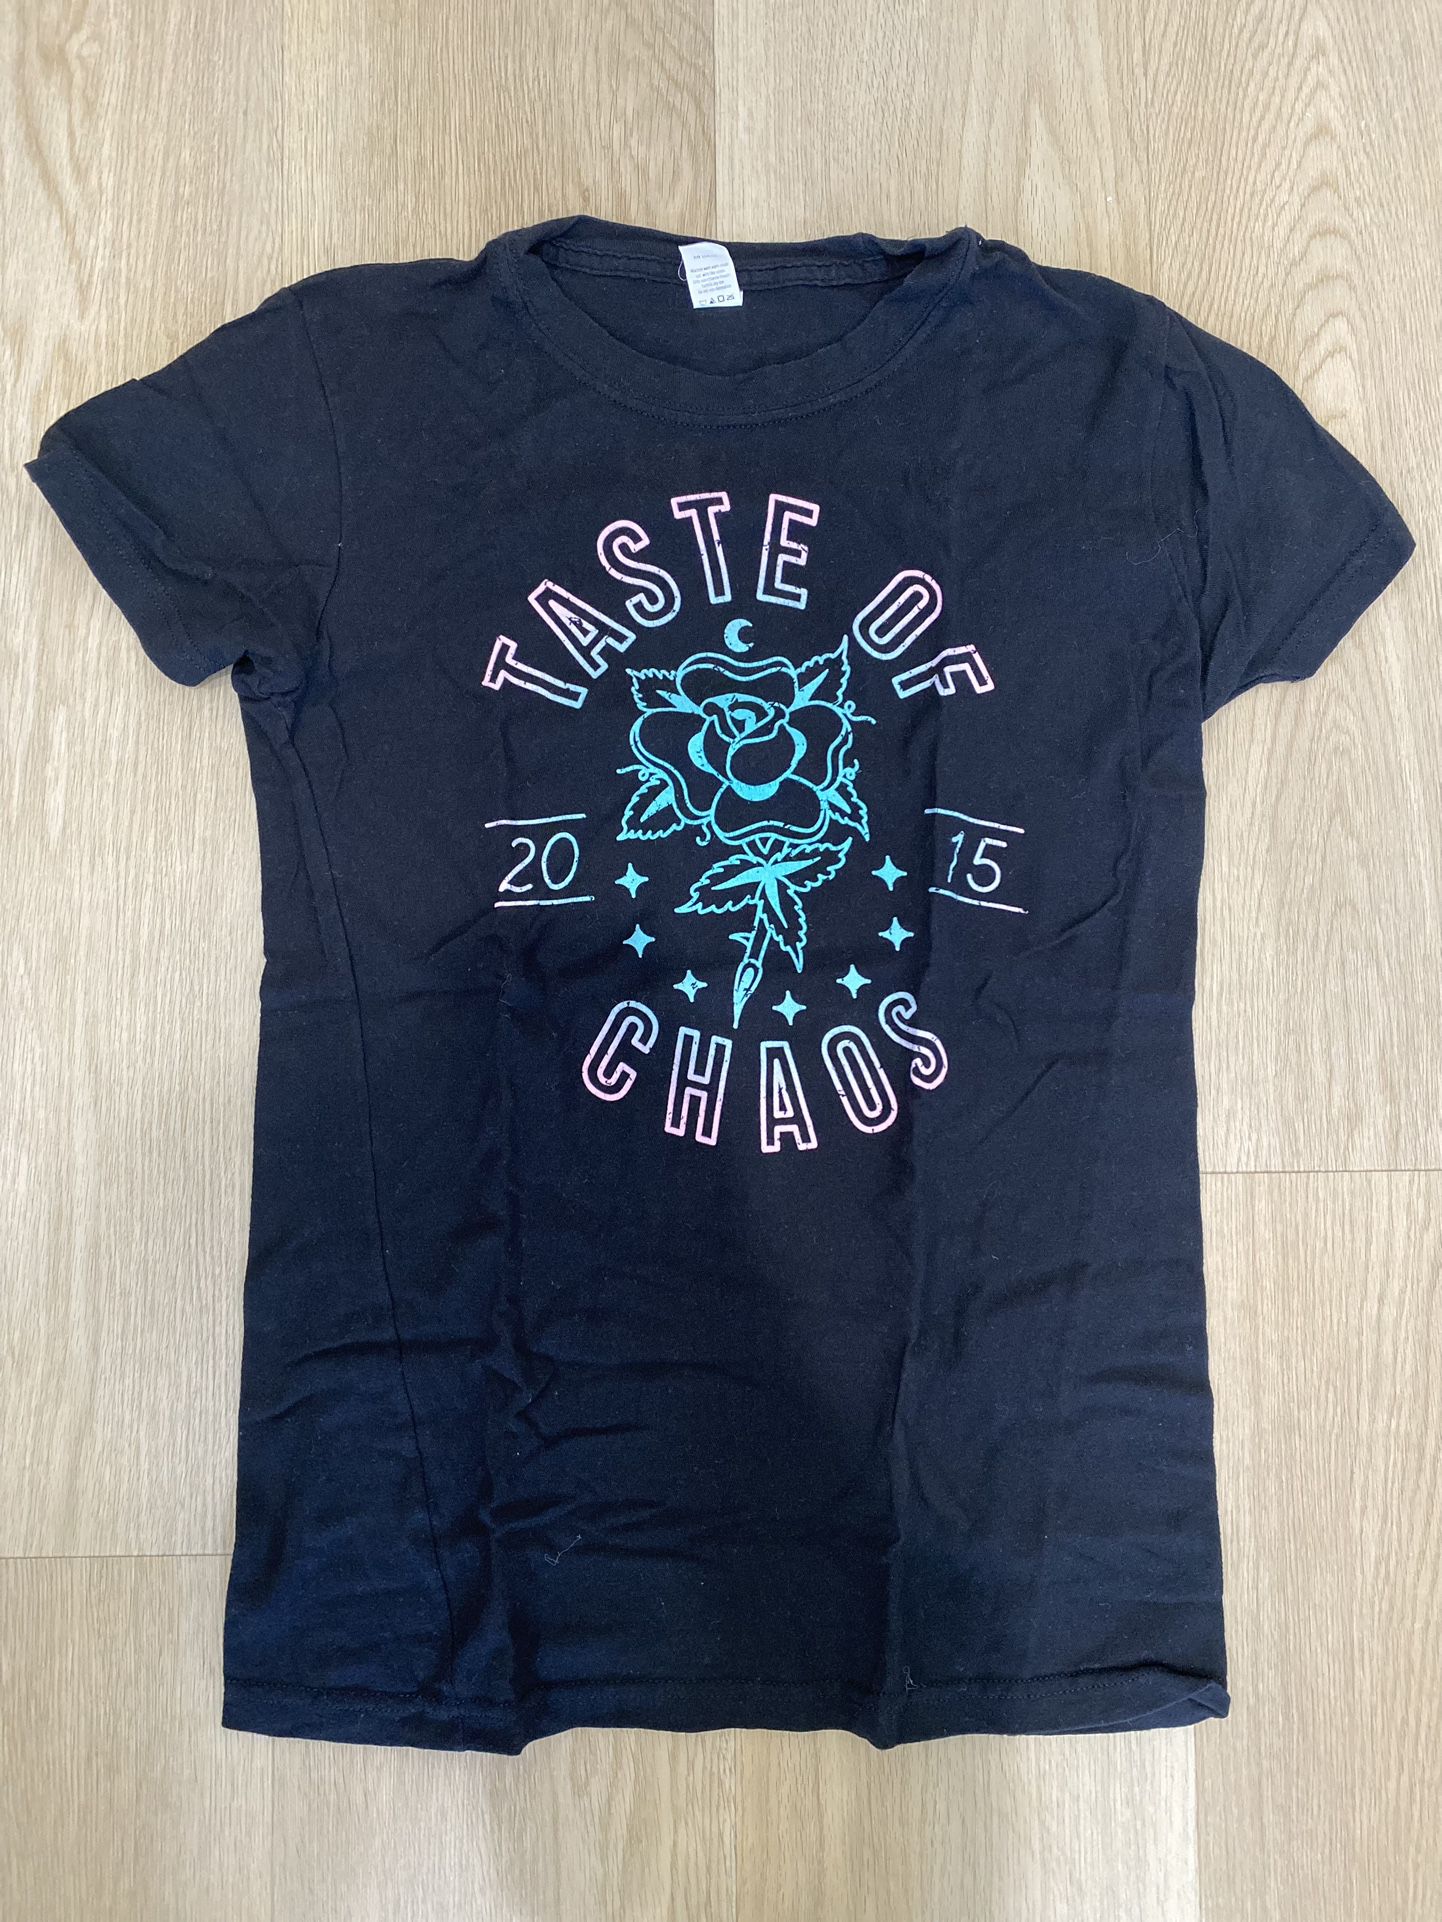 Women’s M Taste Of Chaos 2015 Shirt